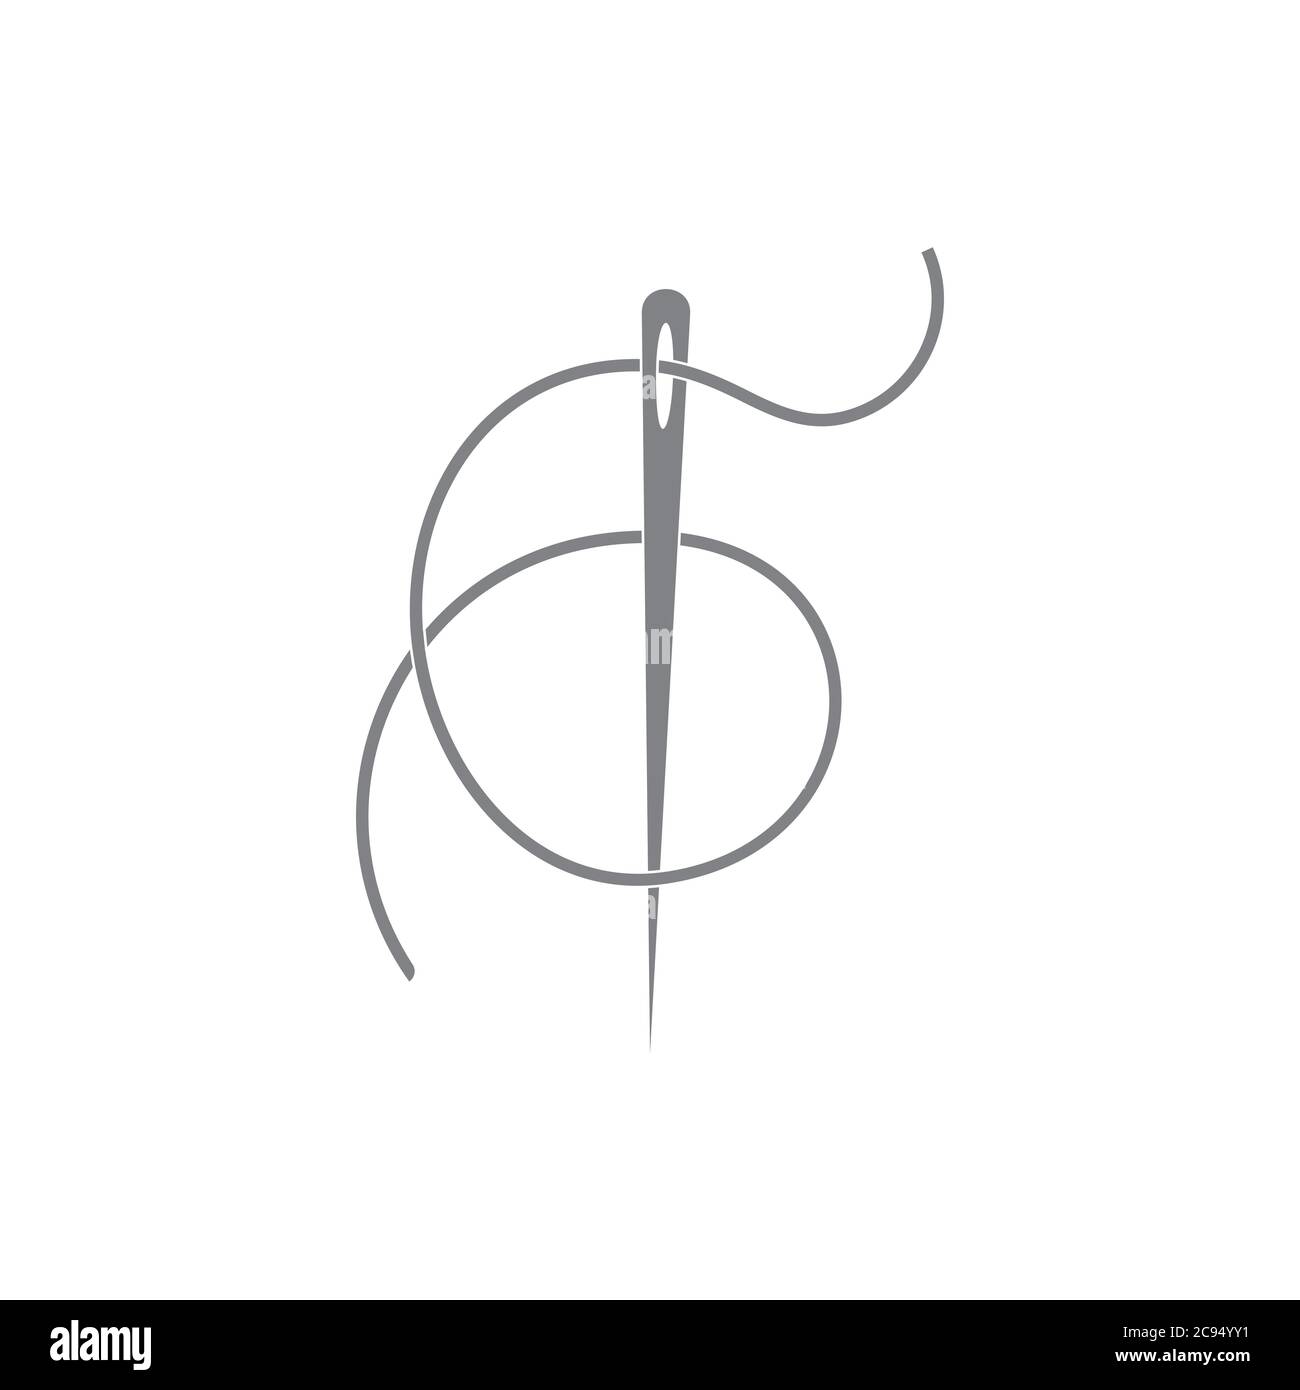 hilo aguja simple vector logo Imagen Vector de stock